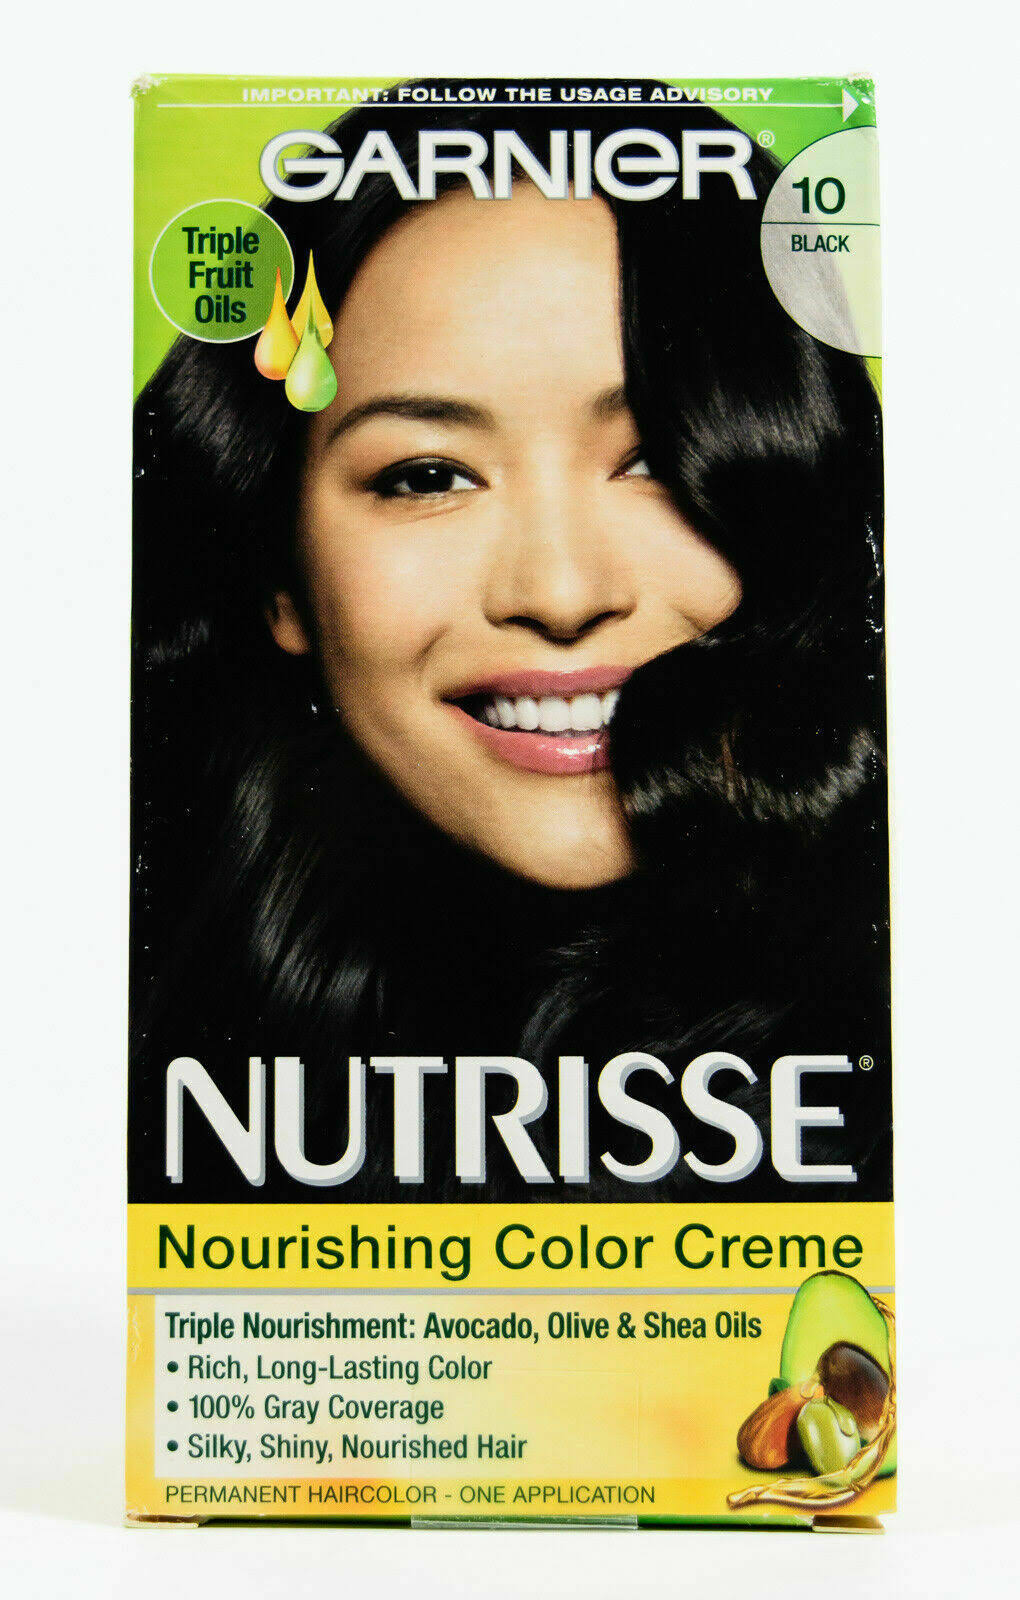 Garnier Nutrisse Nourishing Hair Color Creme - 10 Black